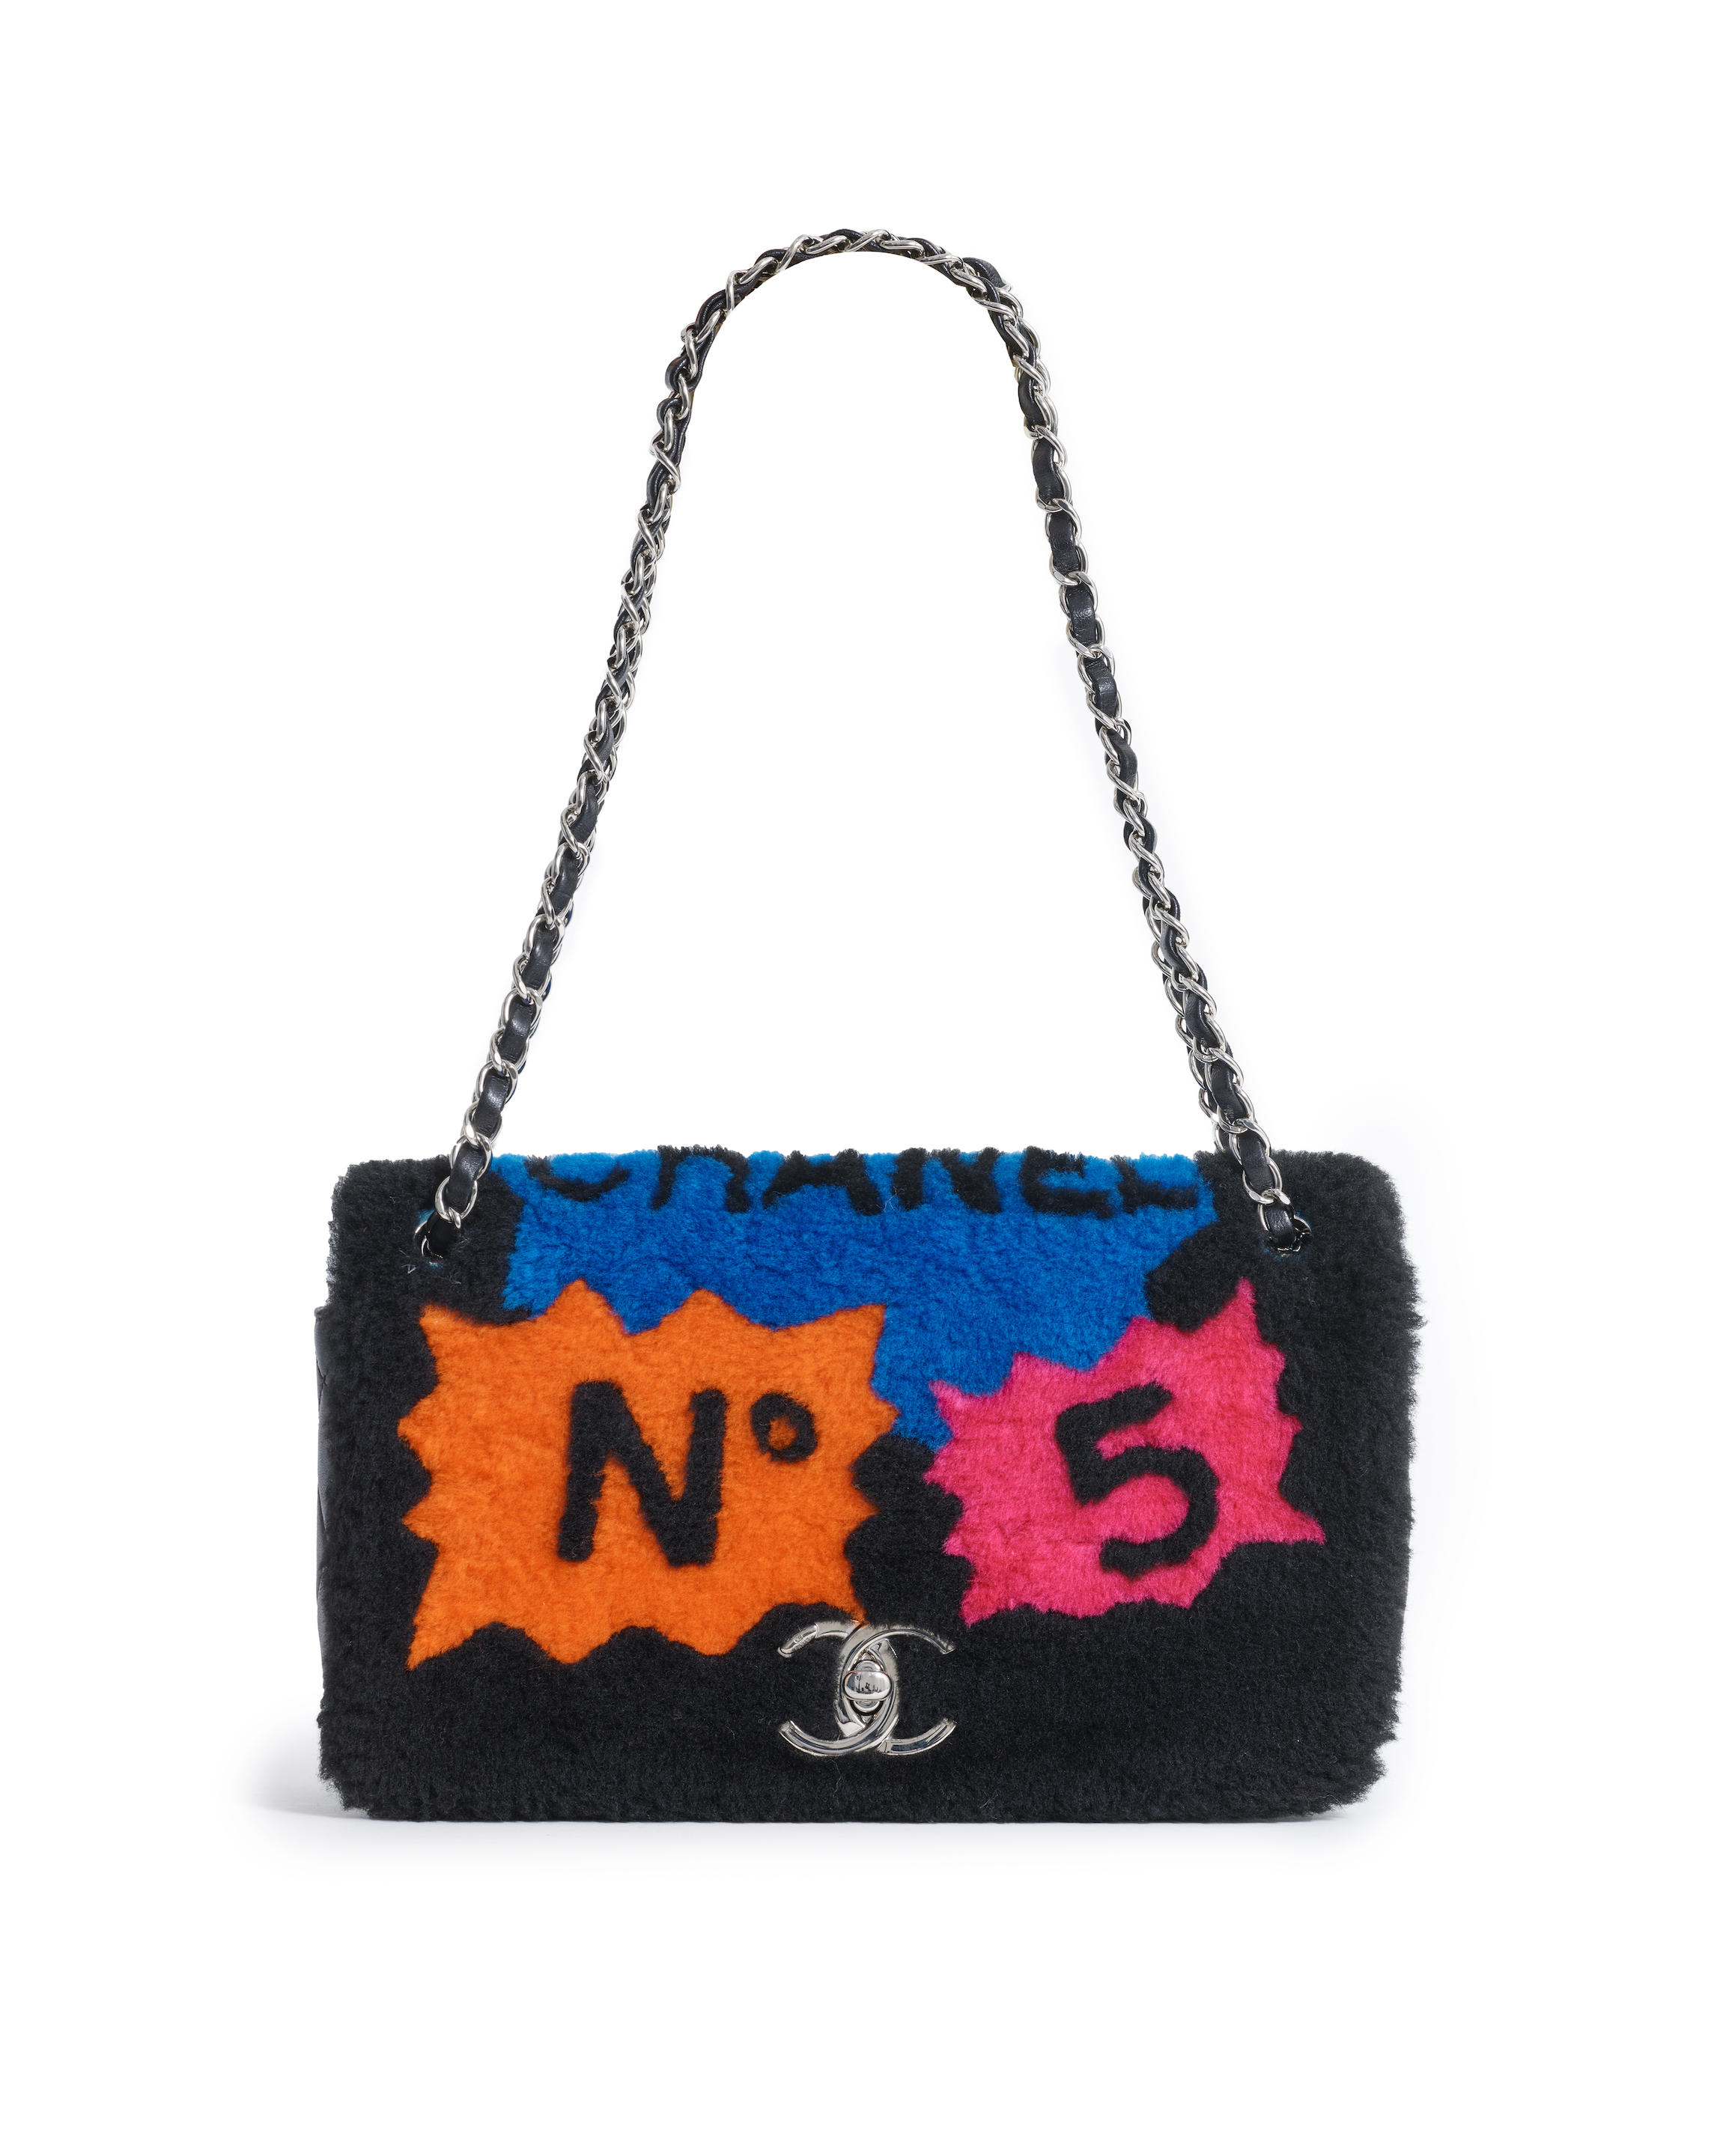 Chanel Limited Edition Runway Shearling Pop Art Flap bag (includes original  dust bag) - Bonhams